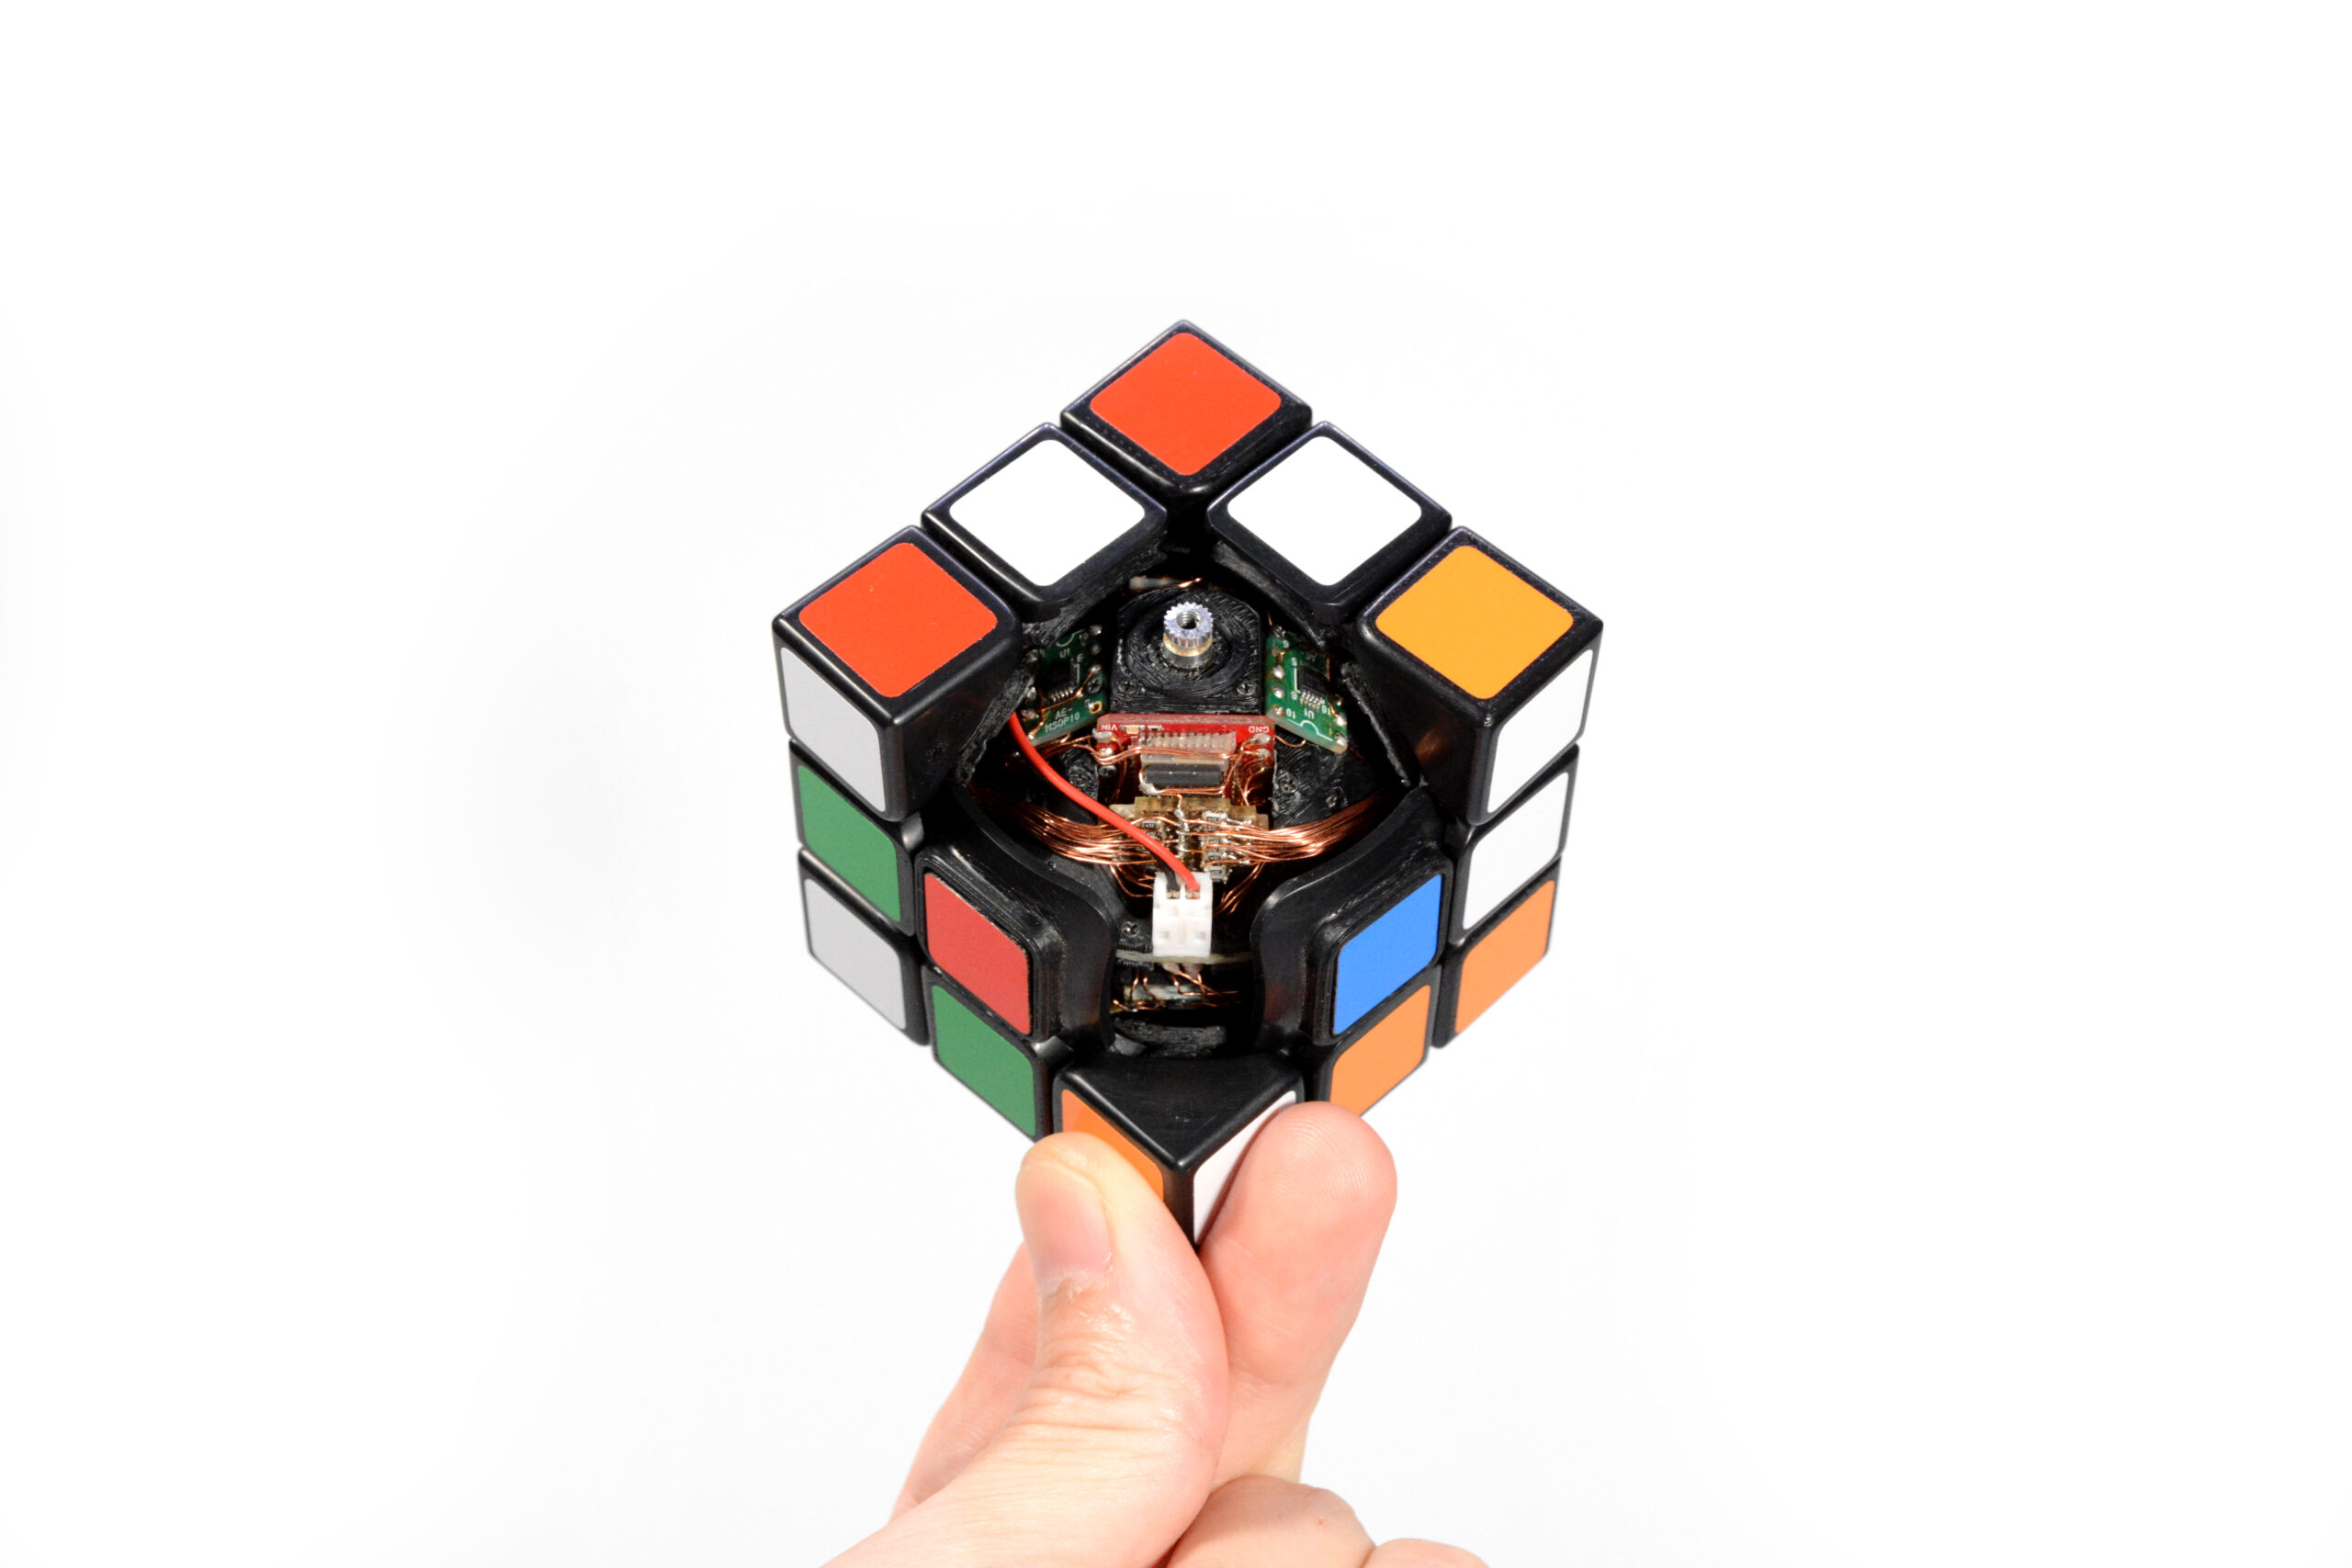 Smart3: The Self-Solving Rubik’s Cube